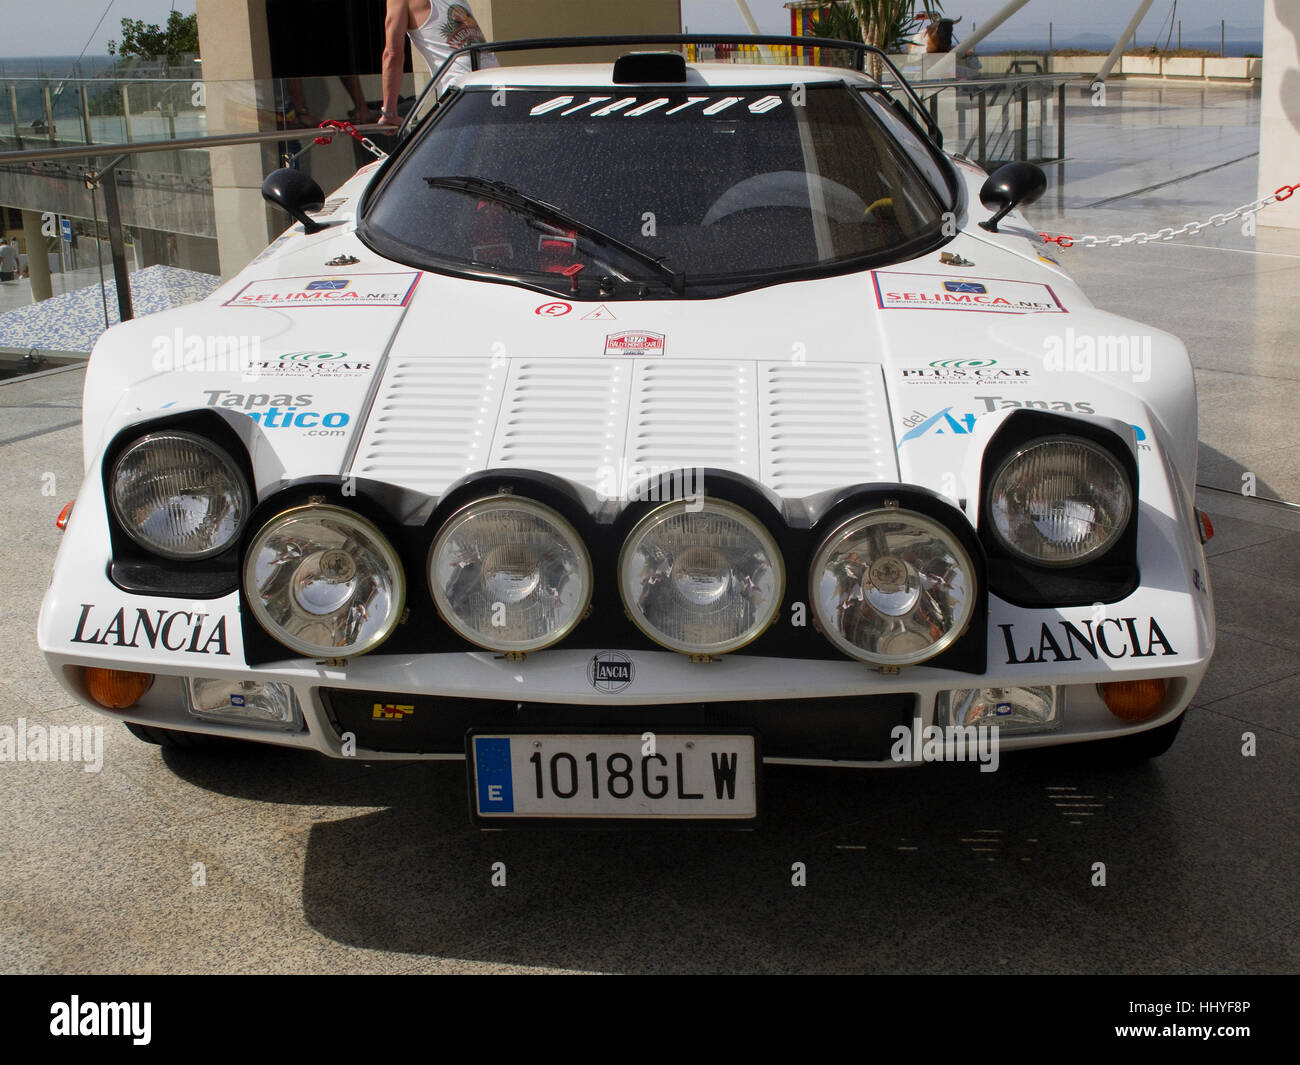 Lancia Stratos rally car on display at shopping centre in Lanzarote. Stock Photo